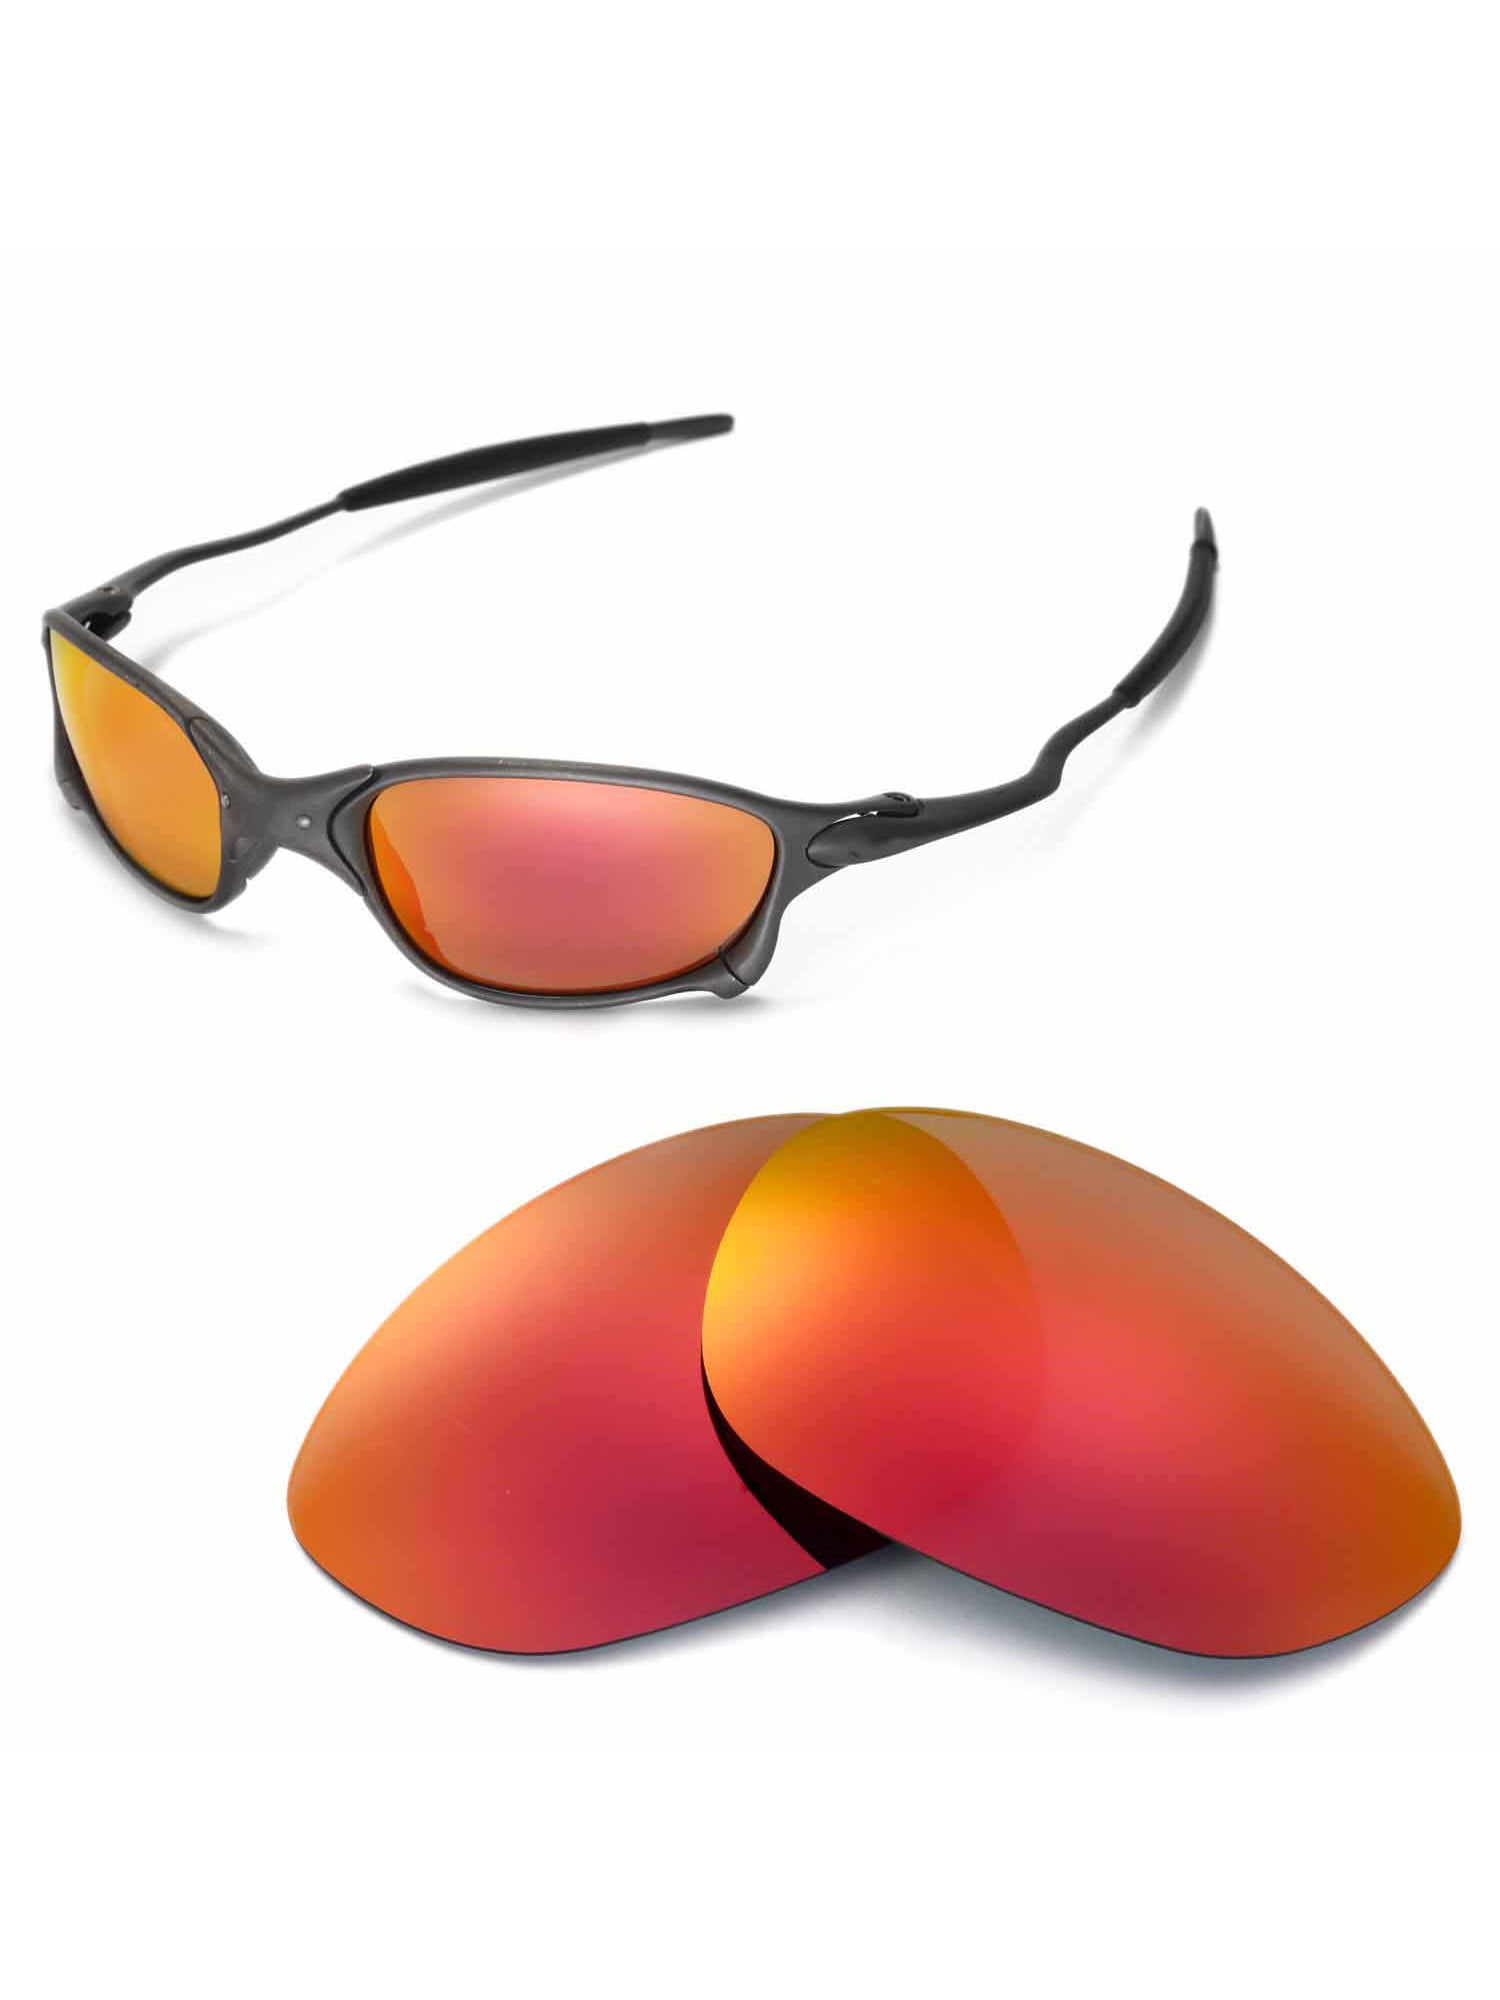 Walleva Purple Polarized Lenses For Oakley X Metal XX Sunglasses 